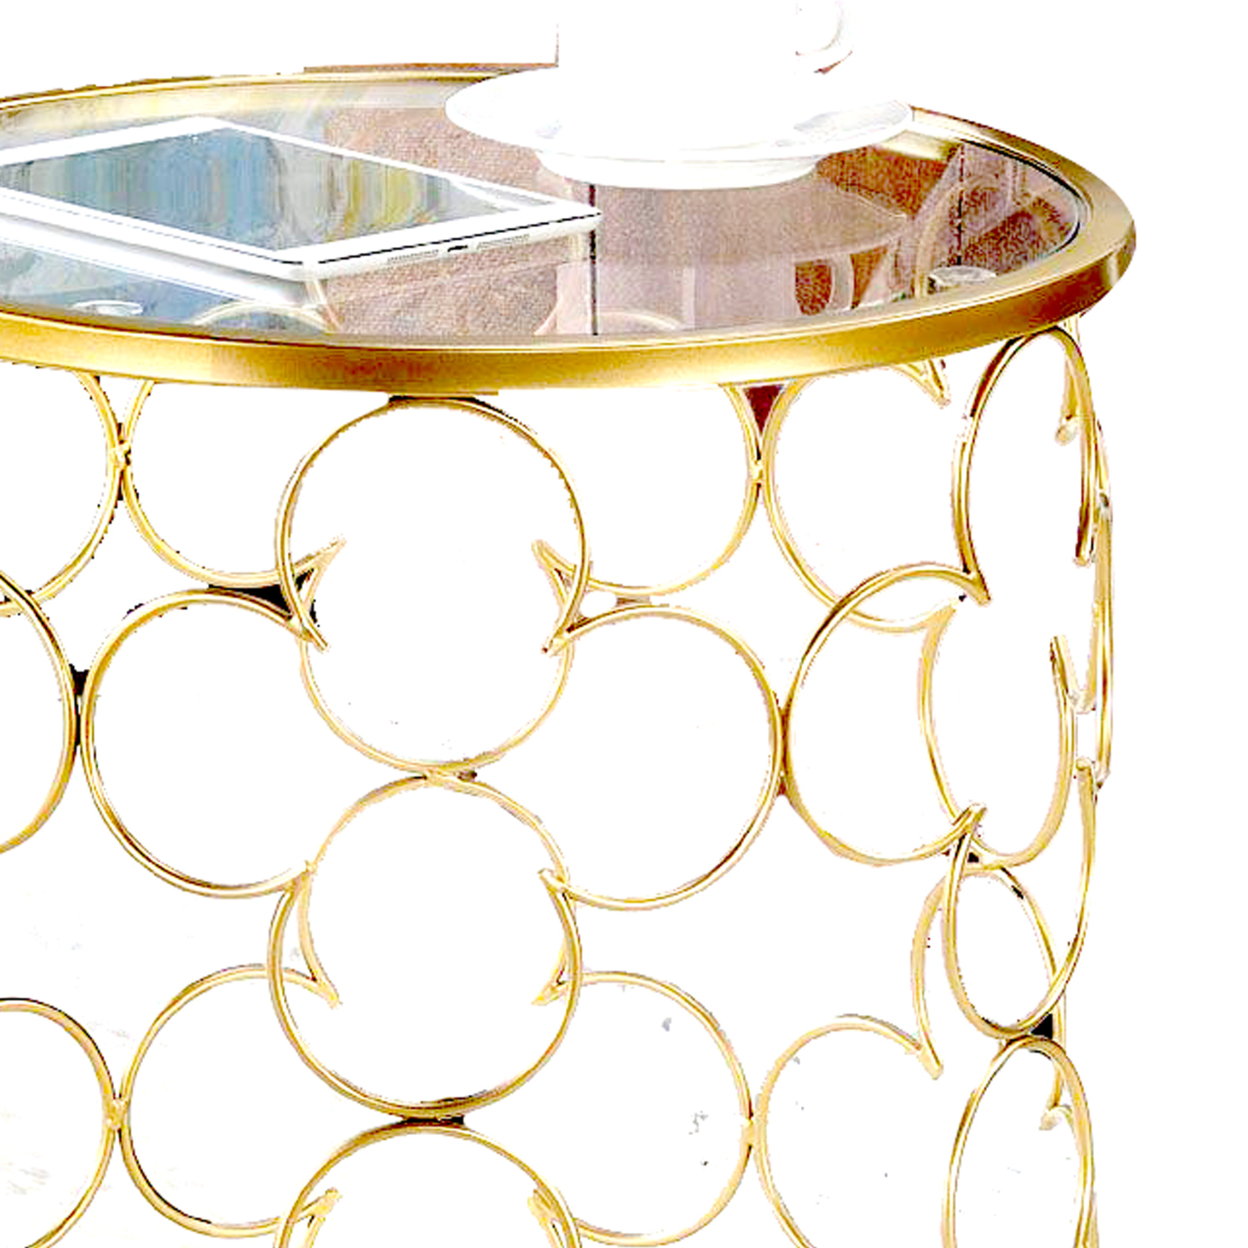 2 Piece Round Nesting Table With Lattice Metal Base, Gold- Saltoro Sherpi